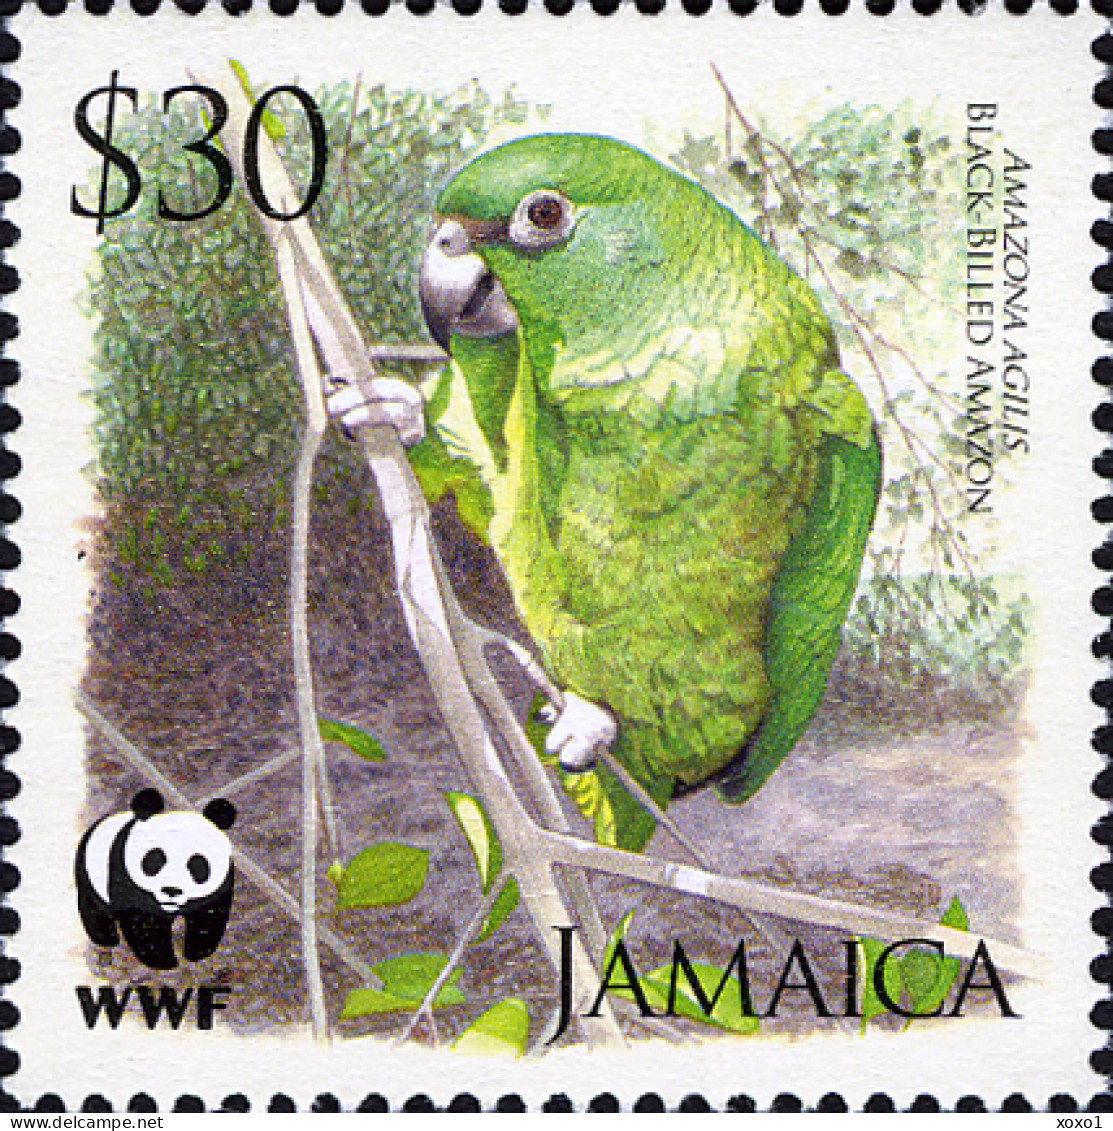 Jamaica 2006 MiNr. 1122 - 1125 Jamaika WWF Birds, Parrots, Black-billed Amazon M/sh MNH** 12.80 € - Ungebraucht